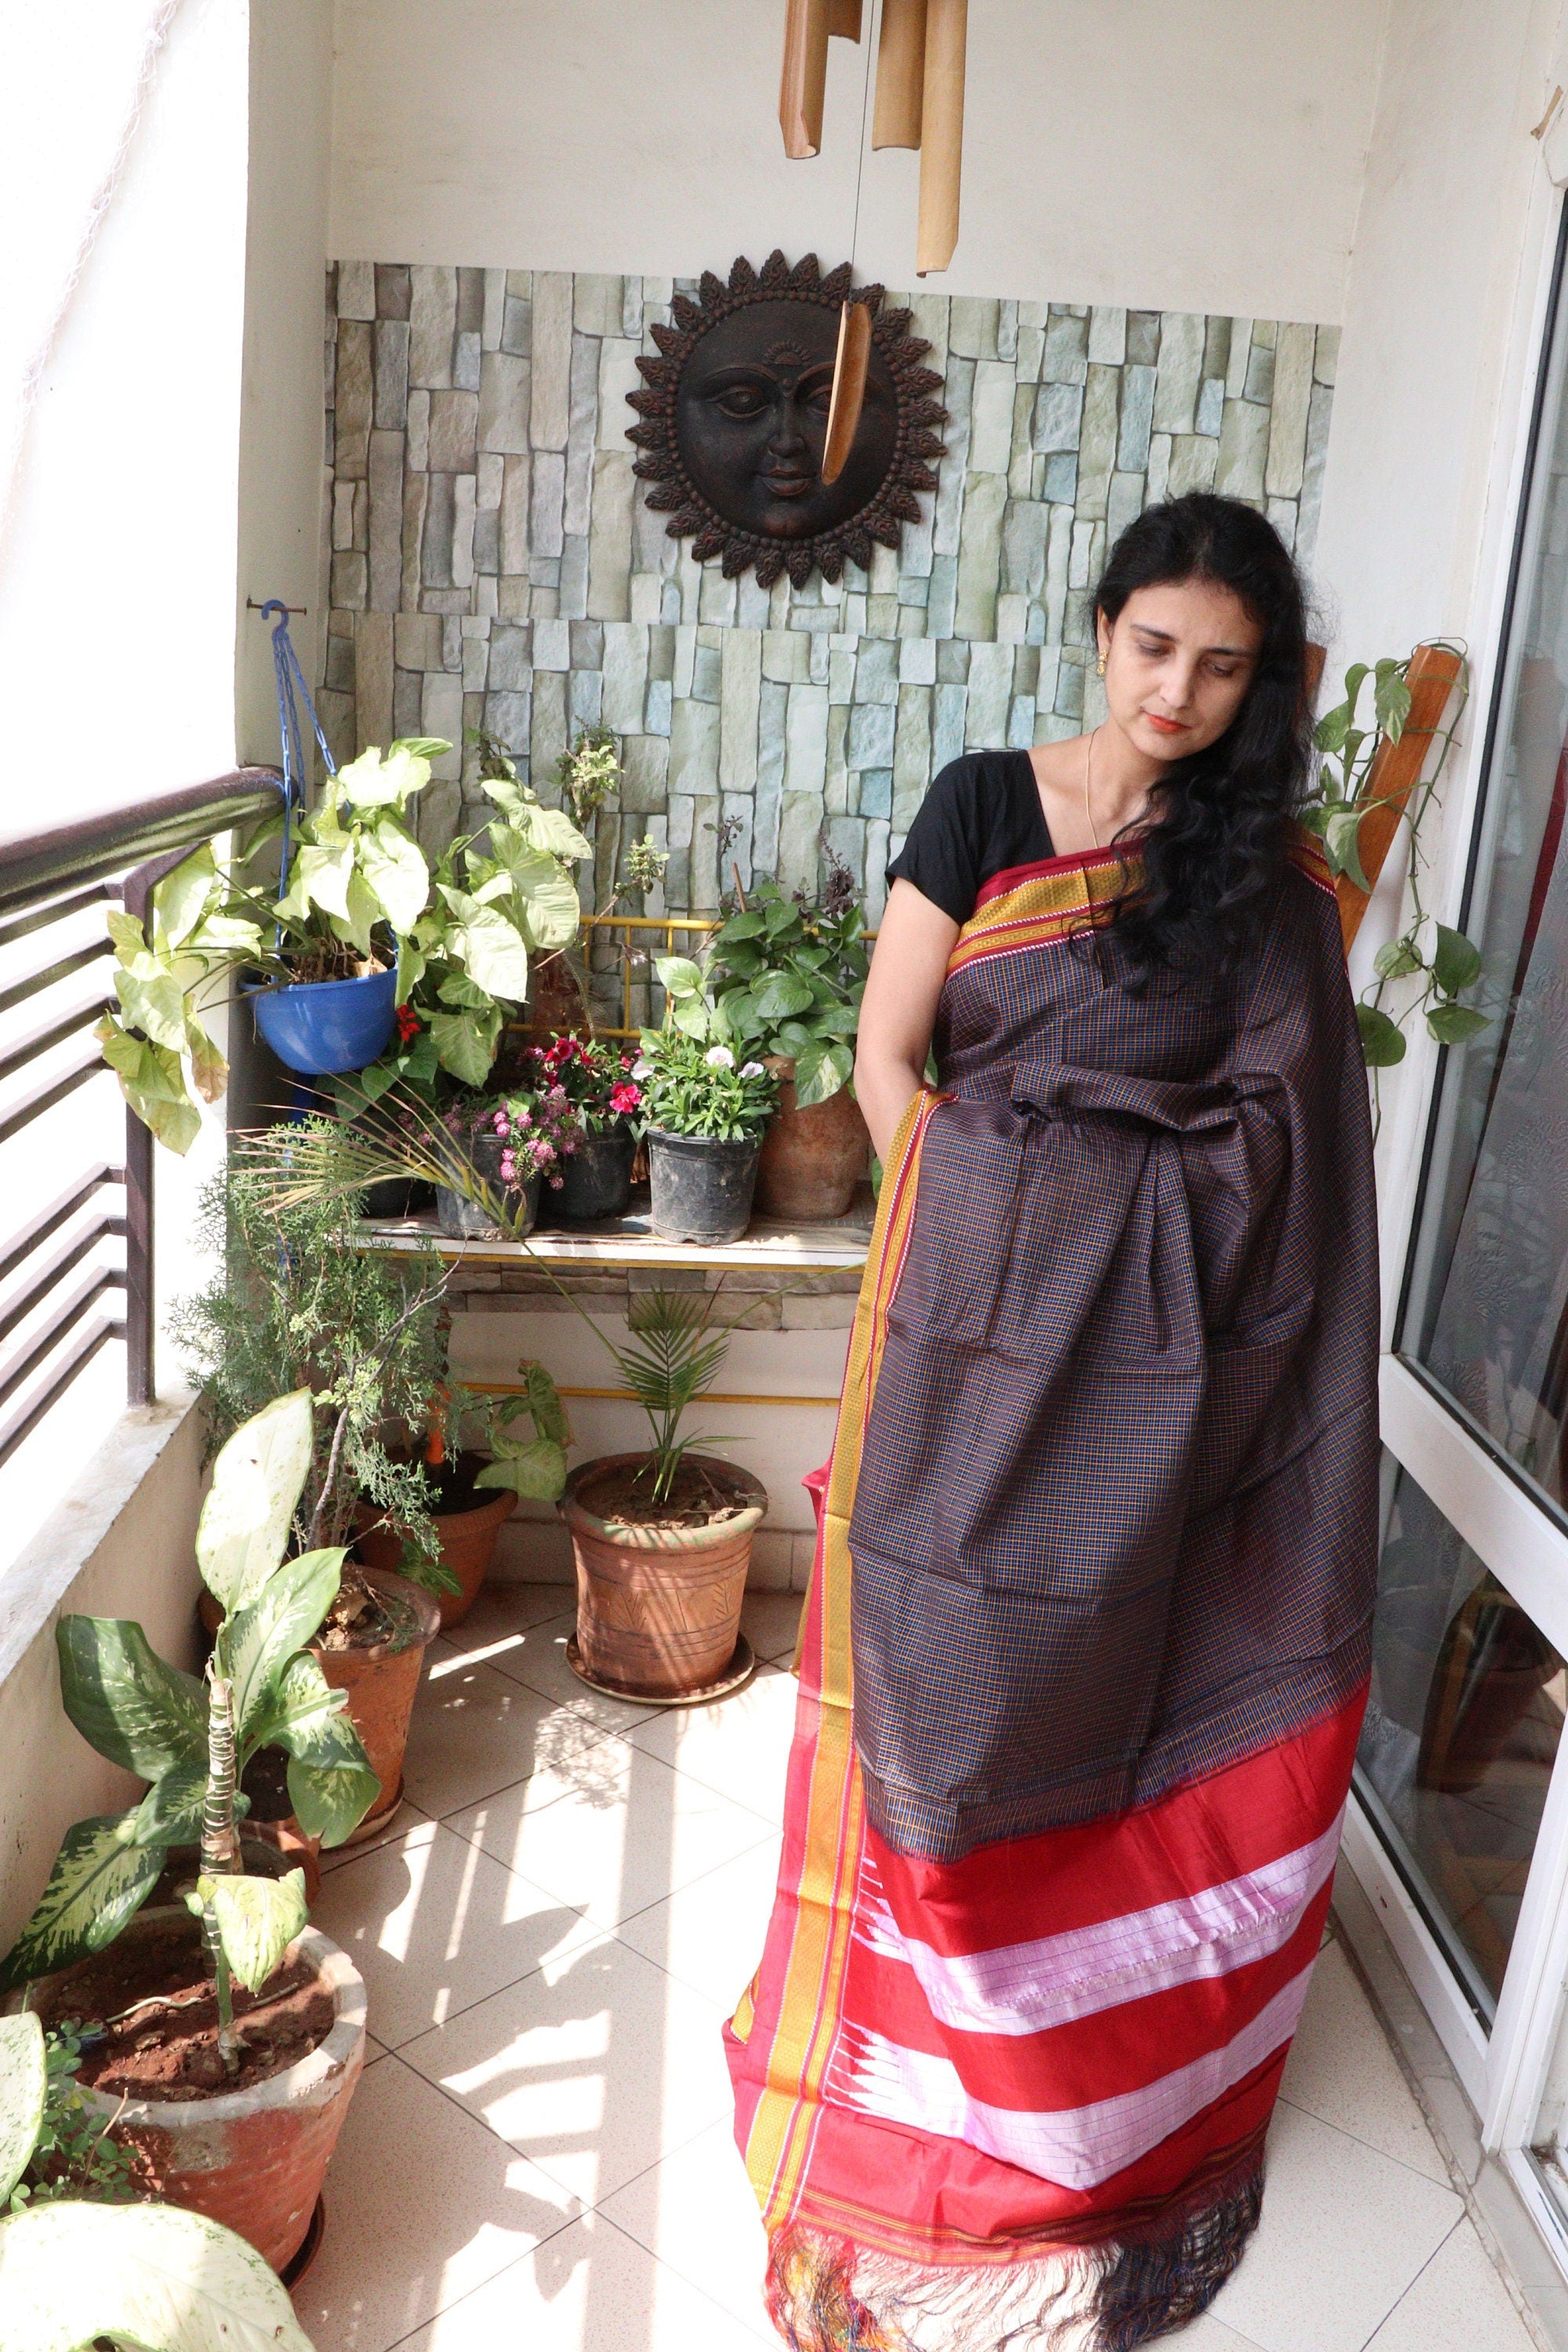 Saree - Illkal Viscose Rayon and Cotton  - Checkered Black & Red - Indian Sari/Indian Dress/Fabric Yard